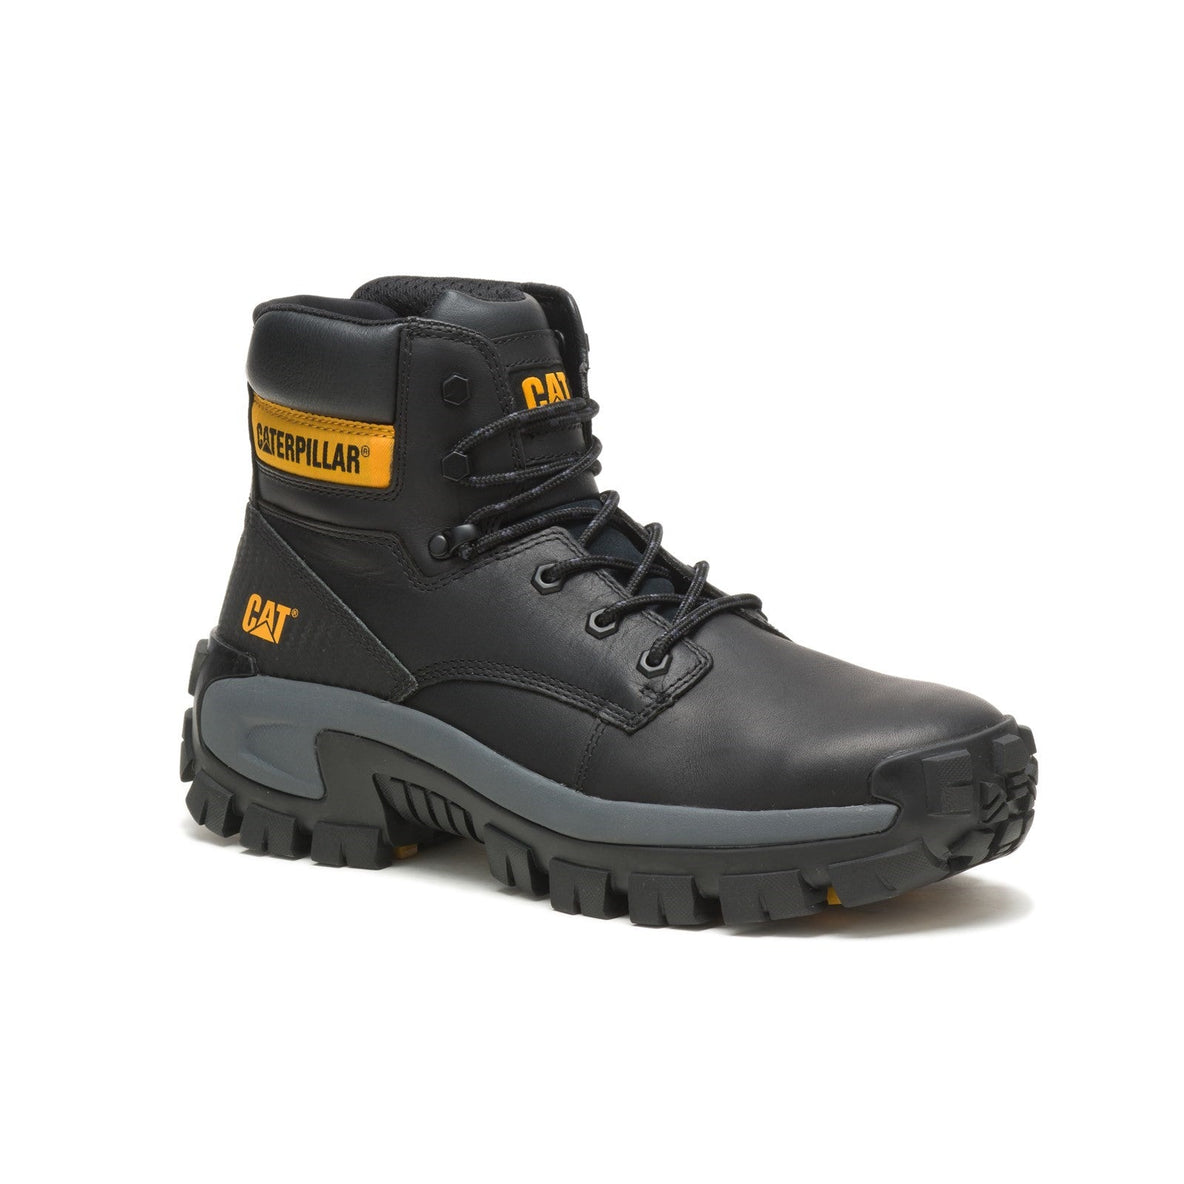 Caterpillar Invader Hiker Safety Boot in Black 